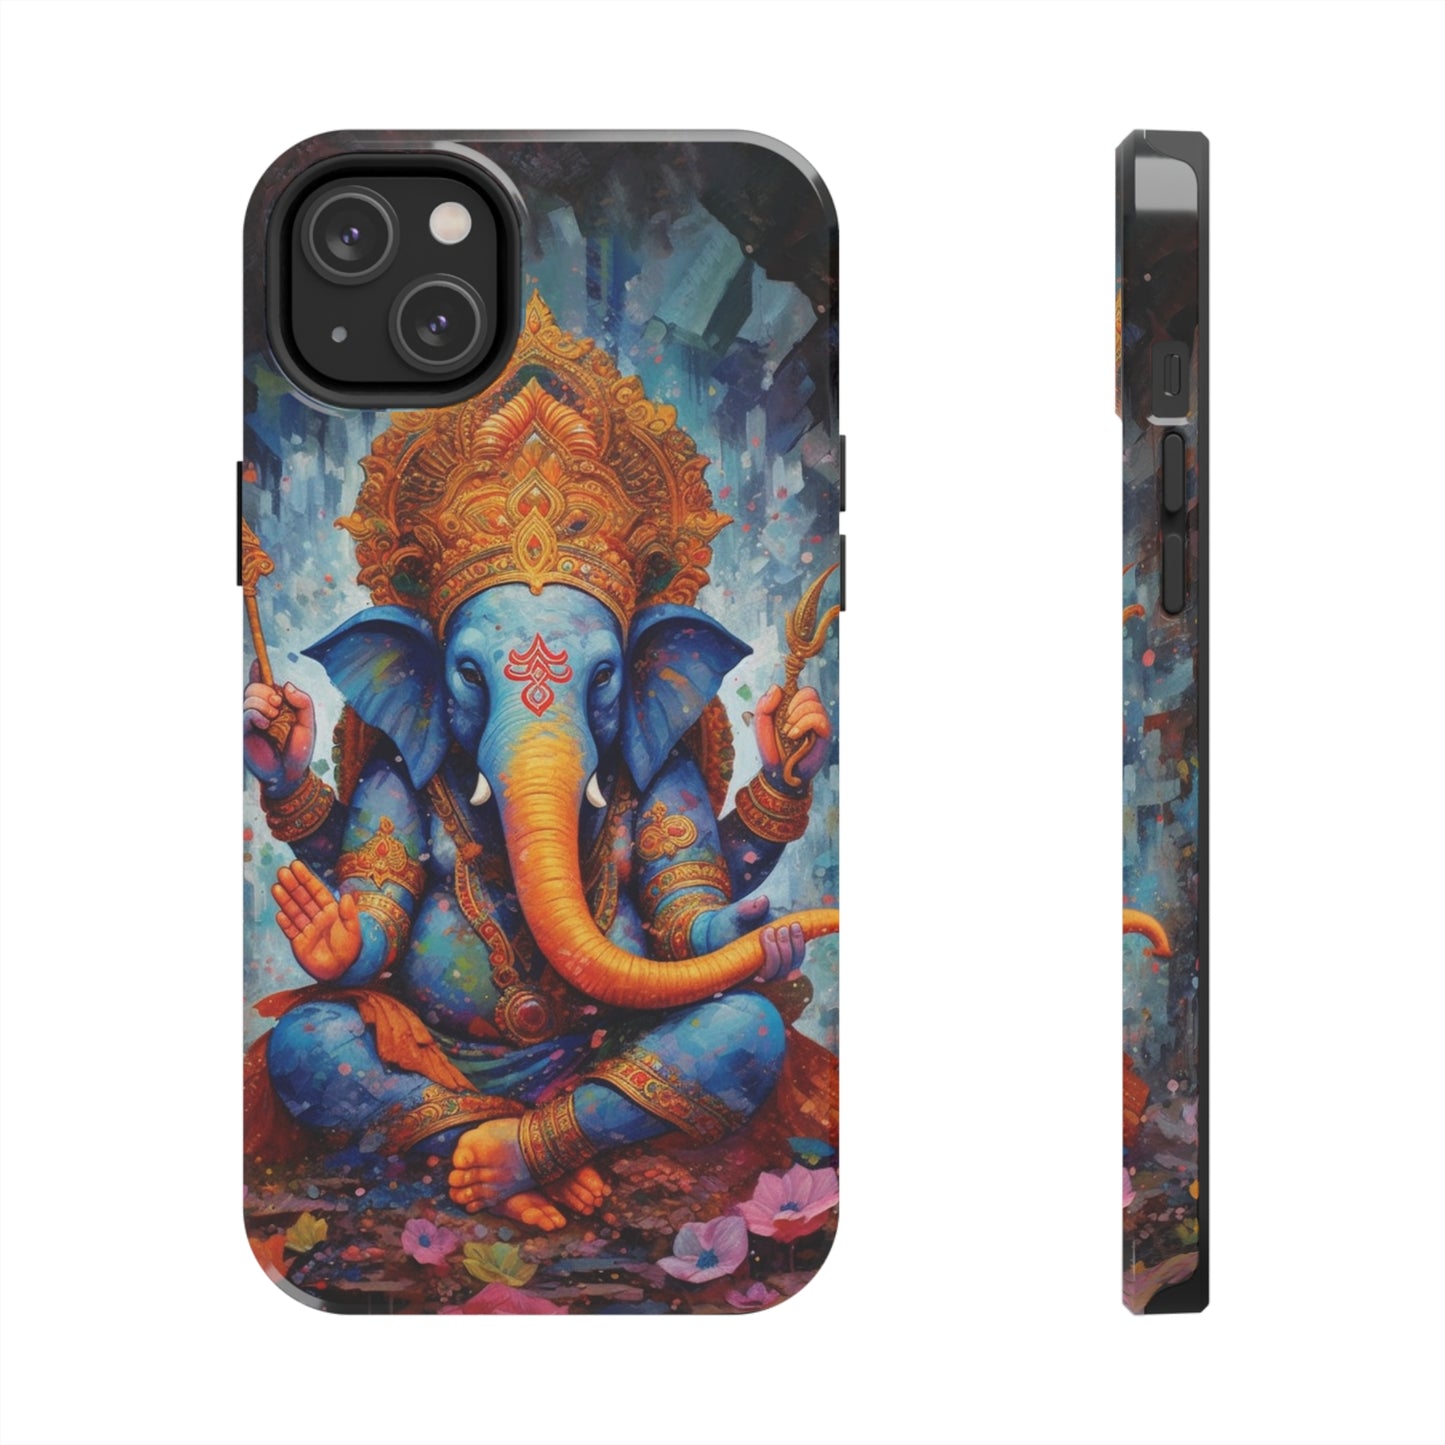 Spiritual Ganesh art on iPhone 12 Pro Max Case